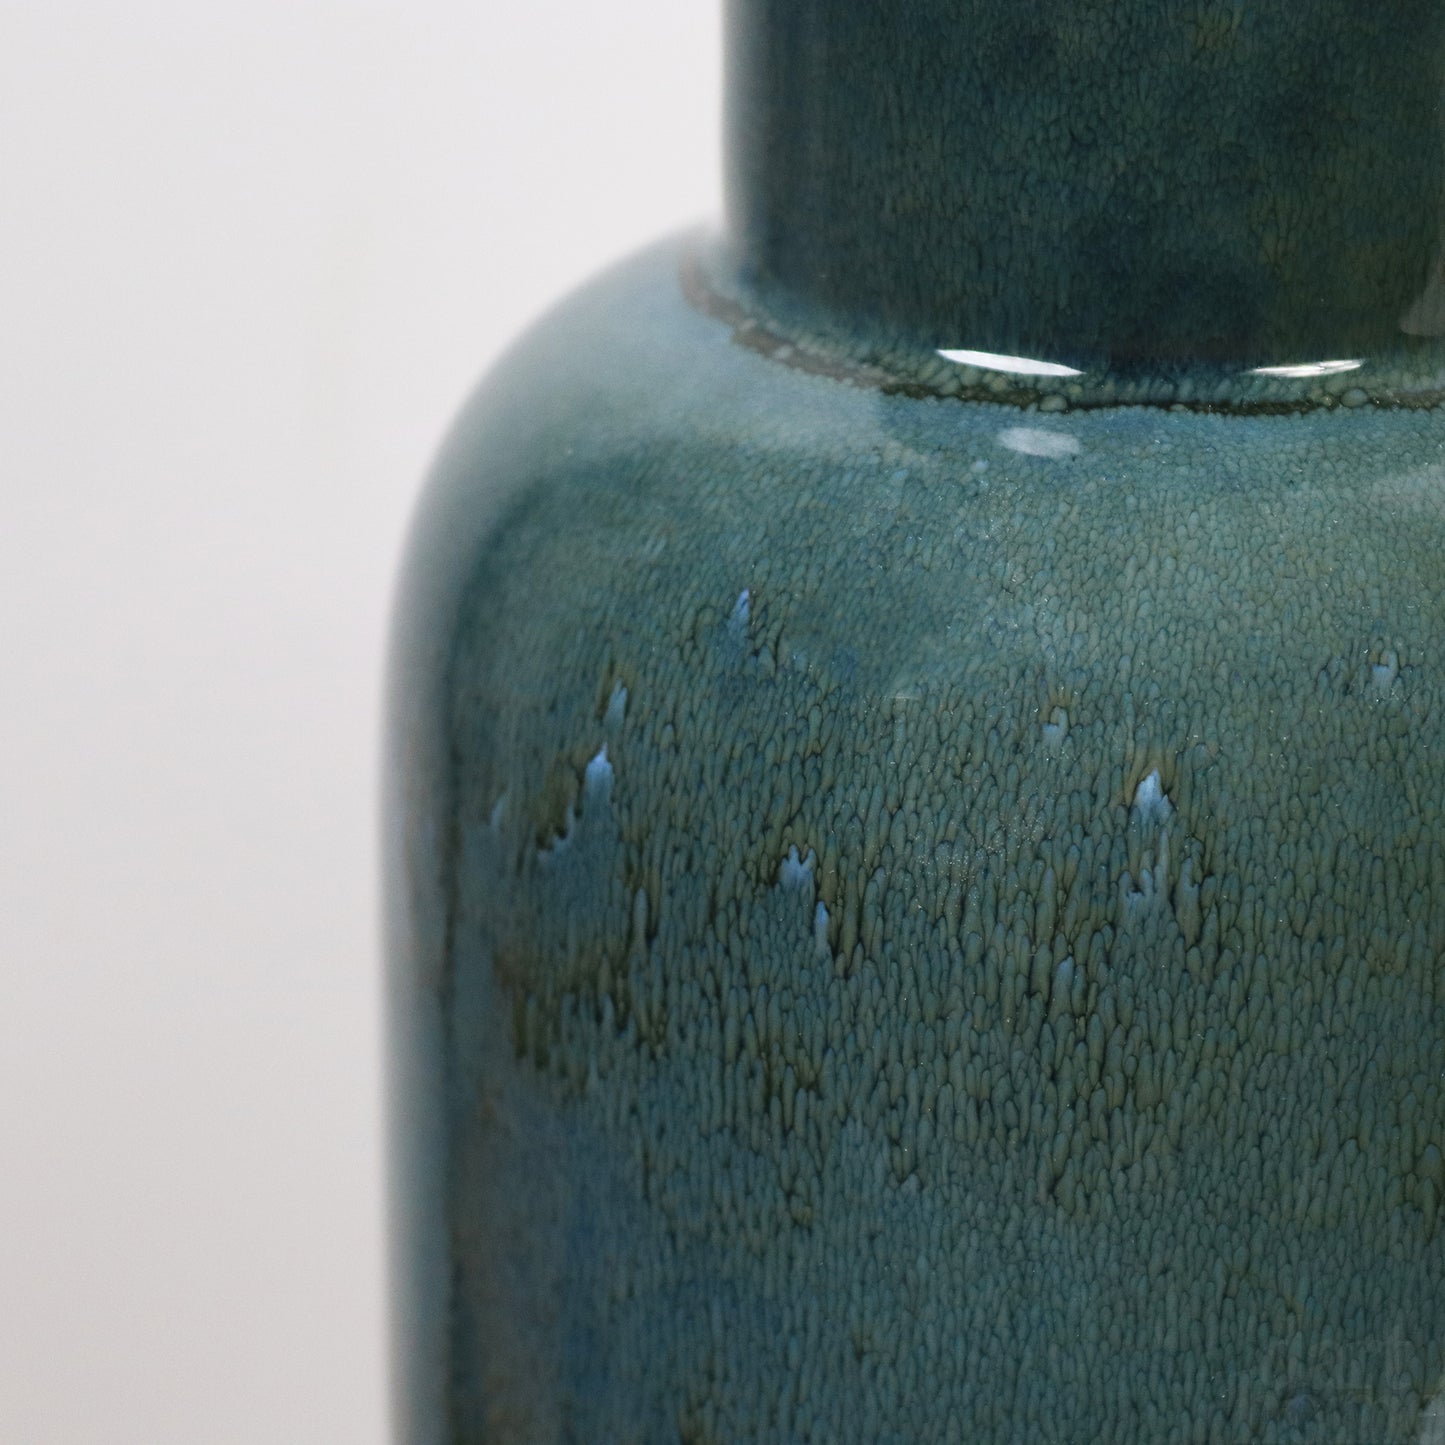 Blue Reactive Glaze Short Neck Bottle Vase